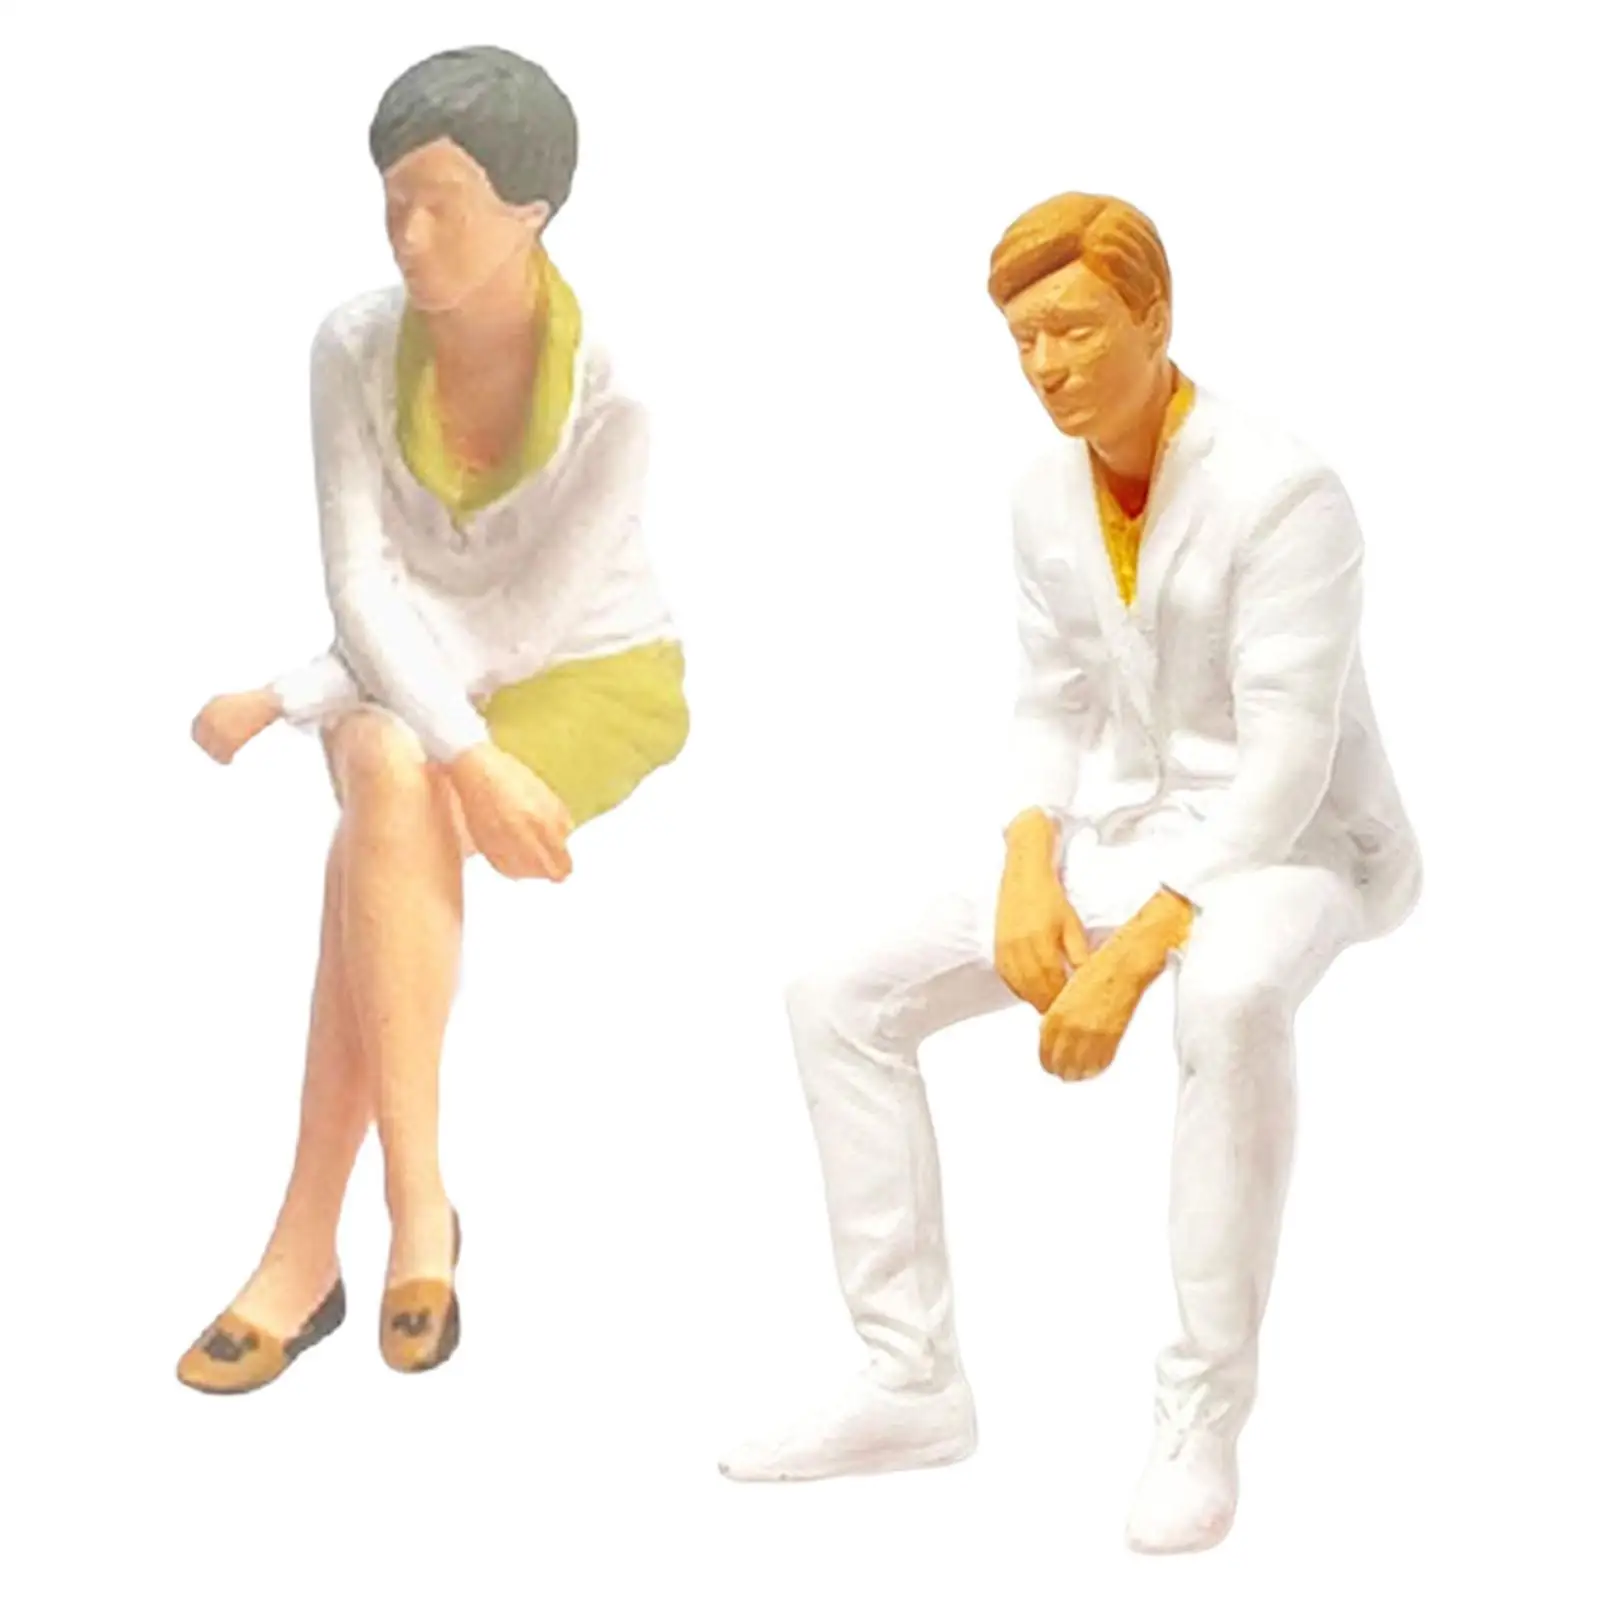 Resin Miniature Scene People Role Play Figure Action Figure Realistic 1/64 People Figurines for DIY Scene Diorama Dollhouse